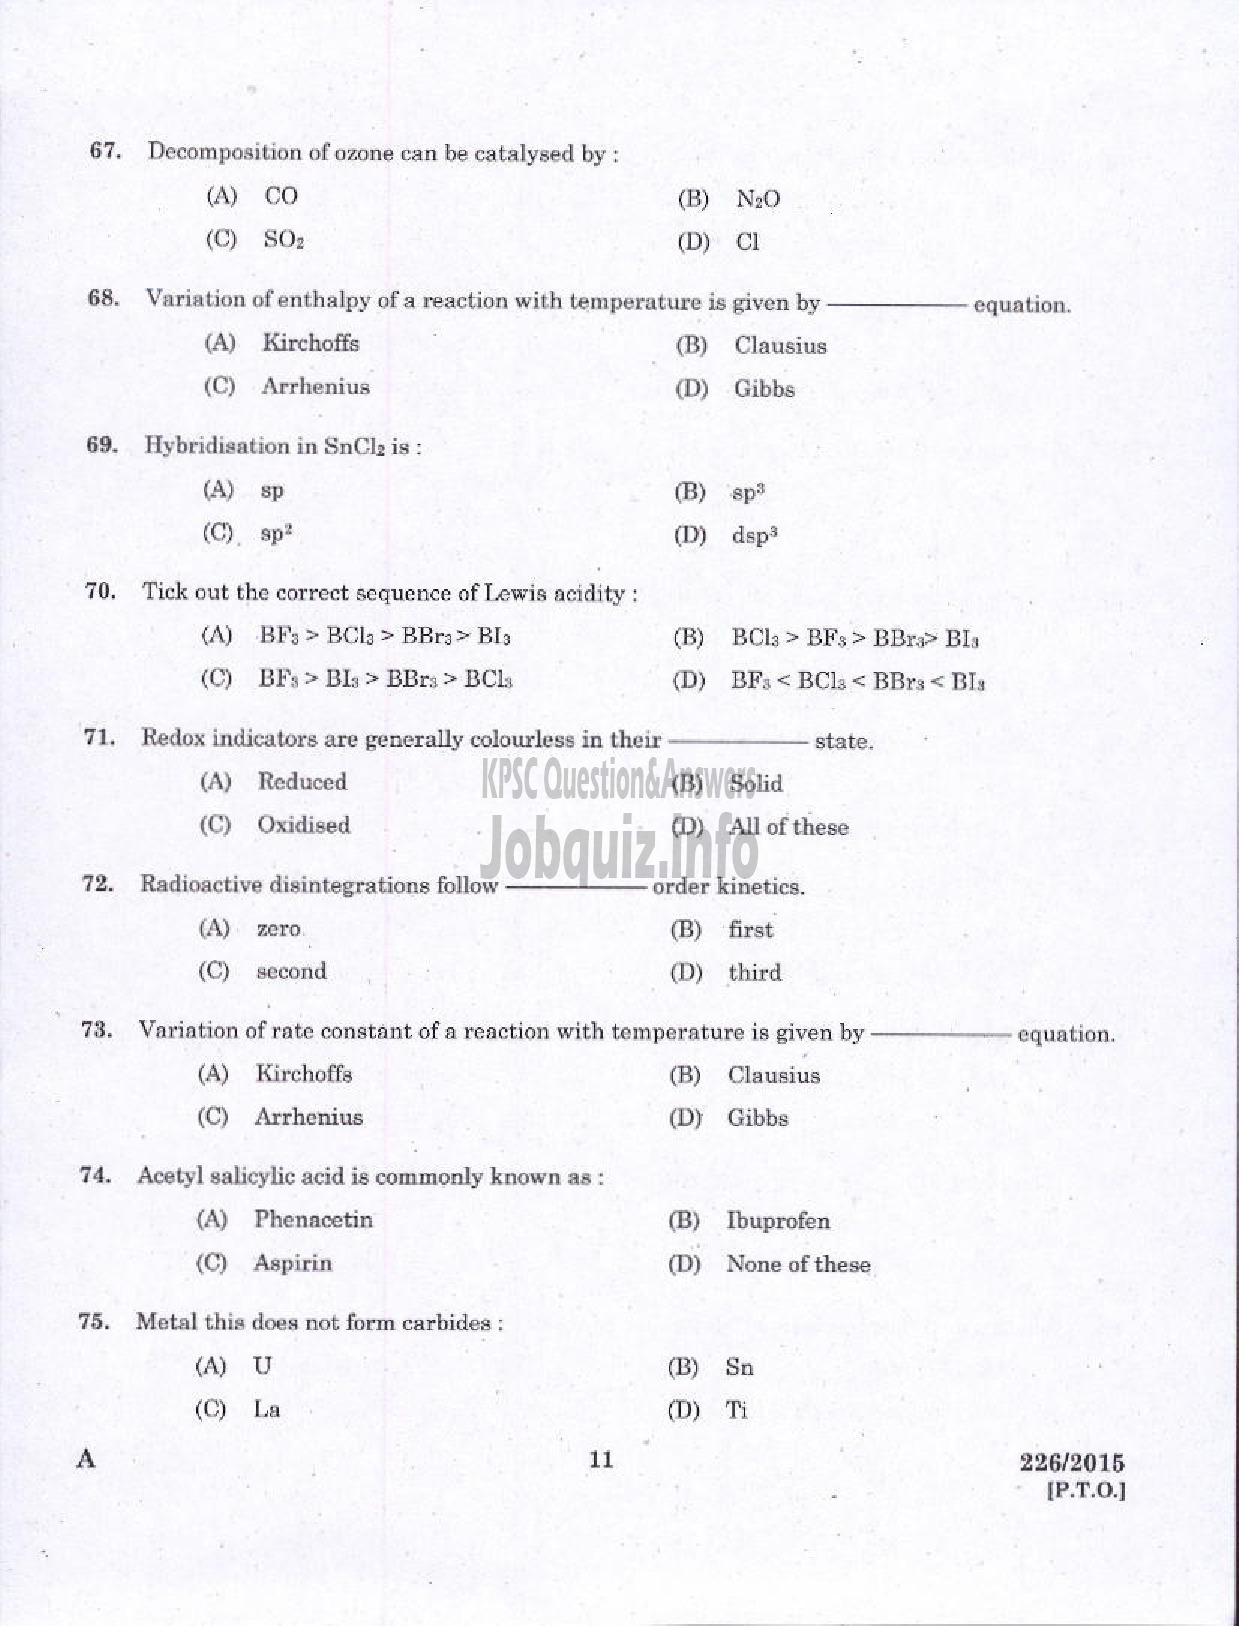 Kerala PSC Question Paper - CHEMIST GR II HEALTH SERVICES-9